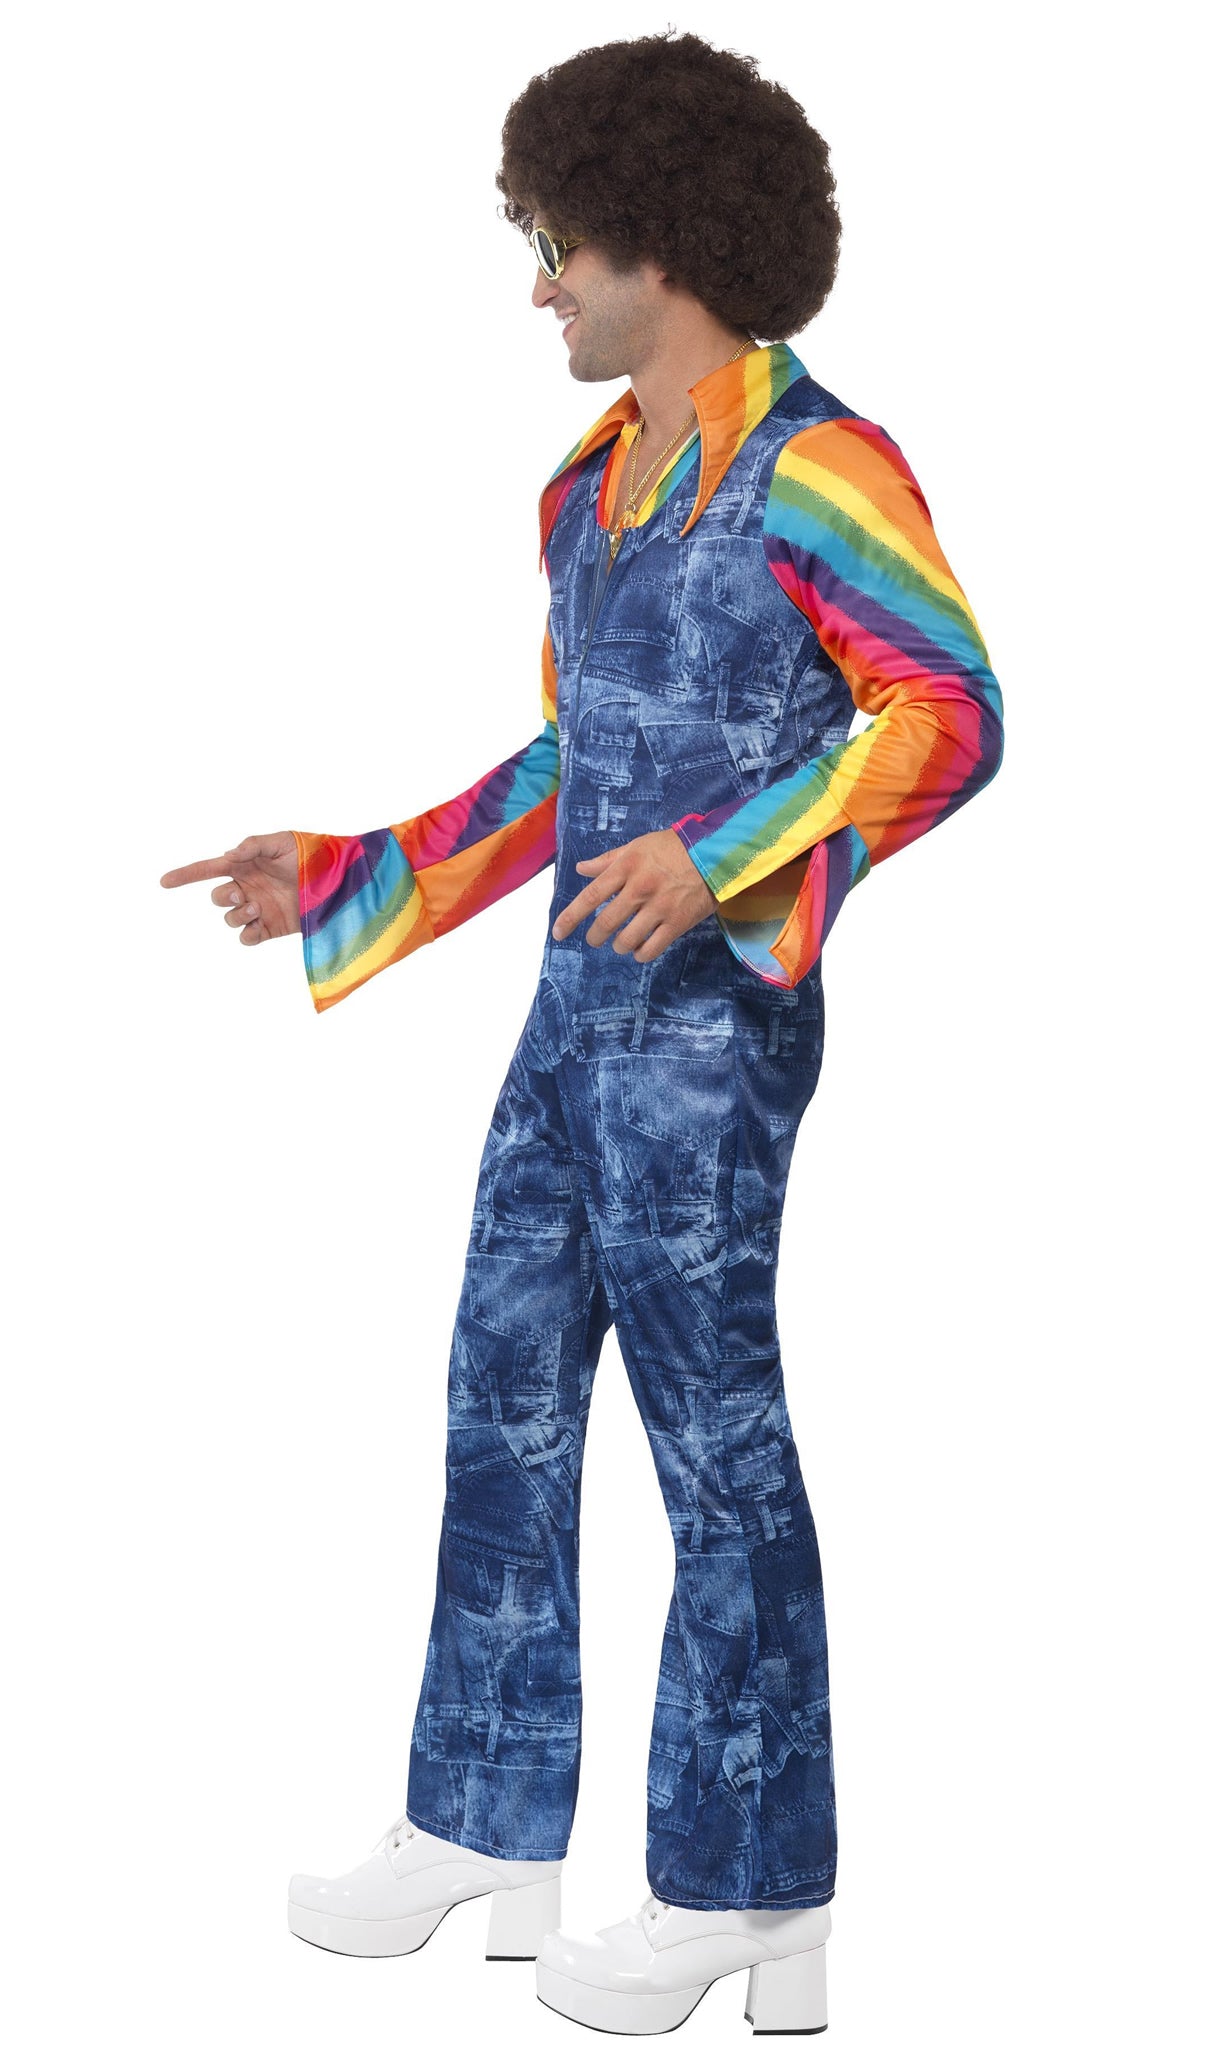 Buy Rainbow Dancer Guy